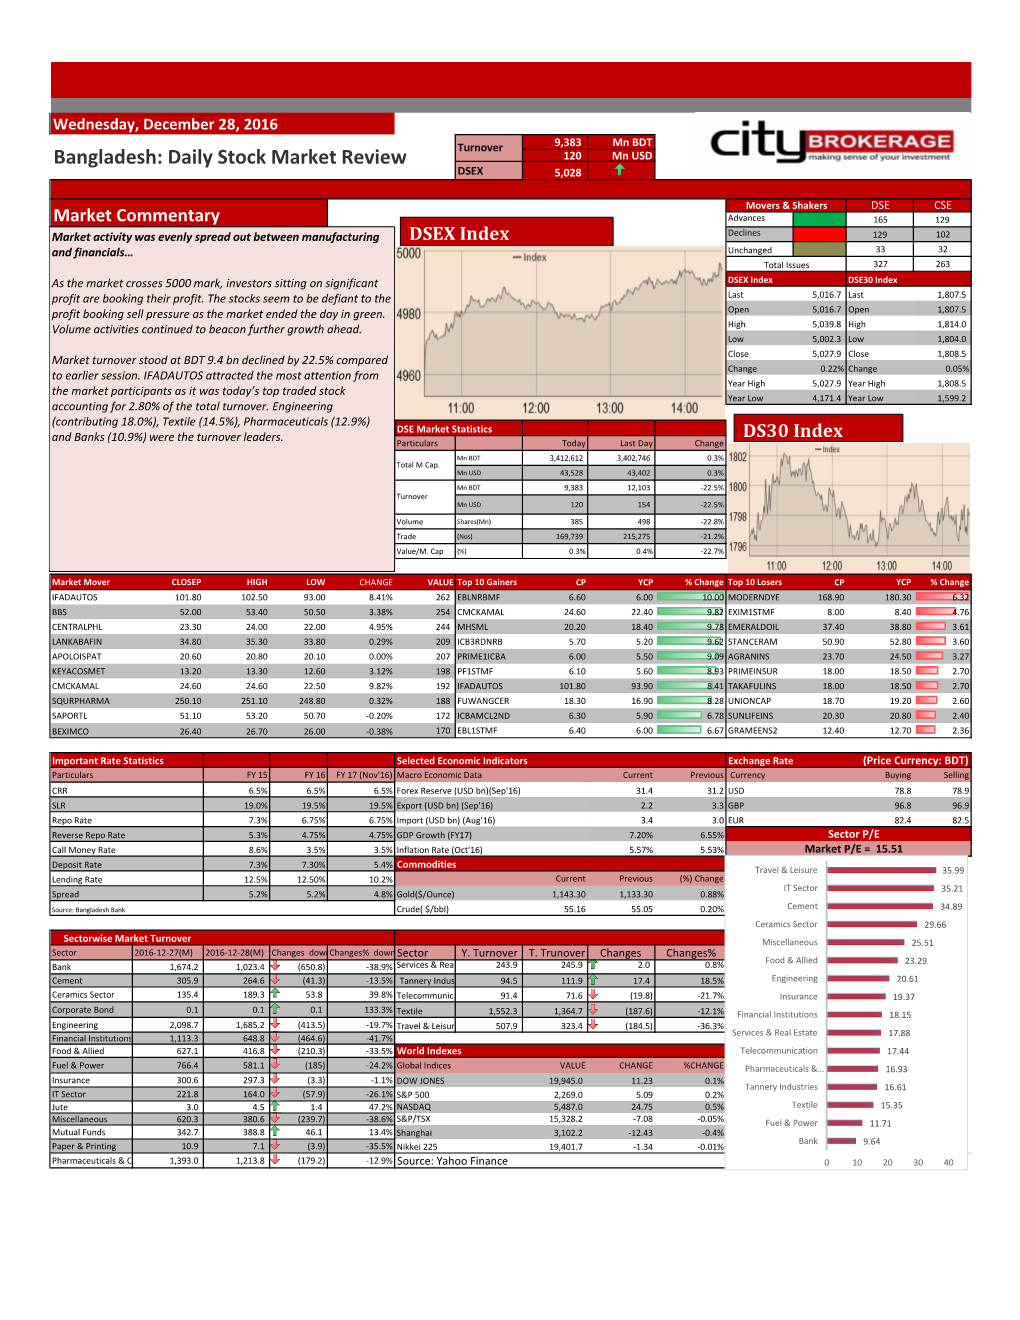 Bangladesh: Daily Stock Market Review 120 Mn USD DSEX 5,028